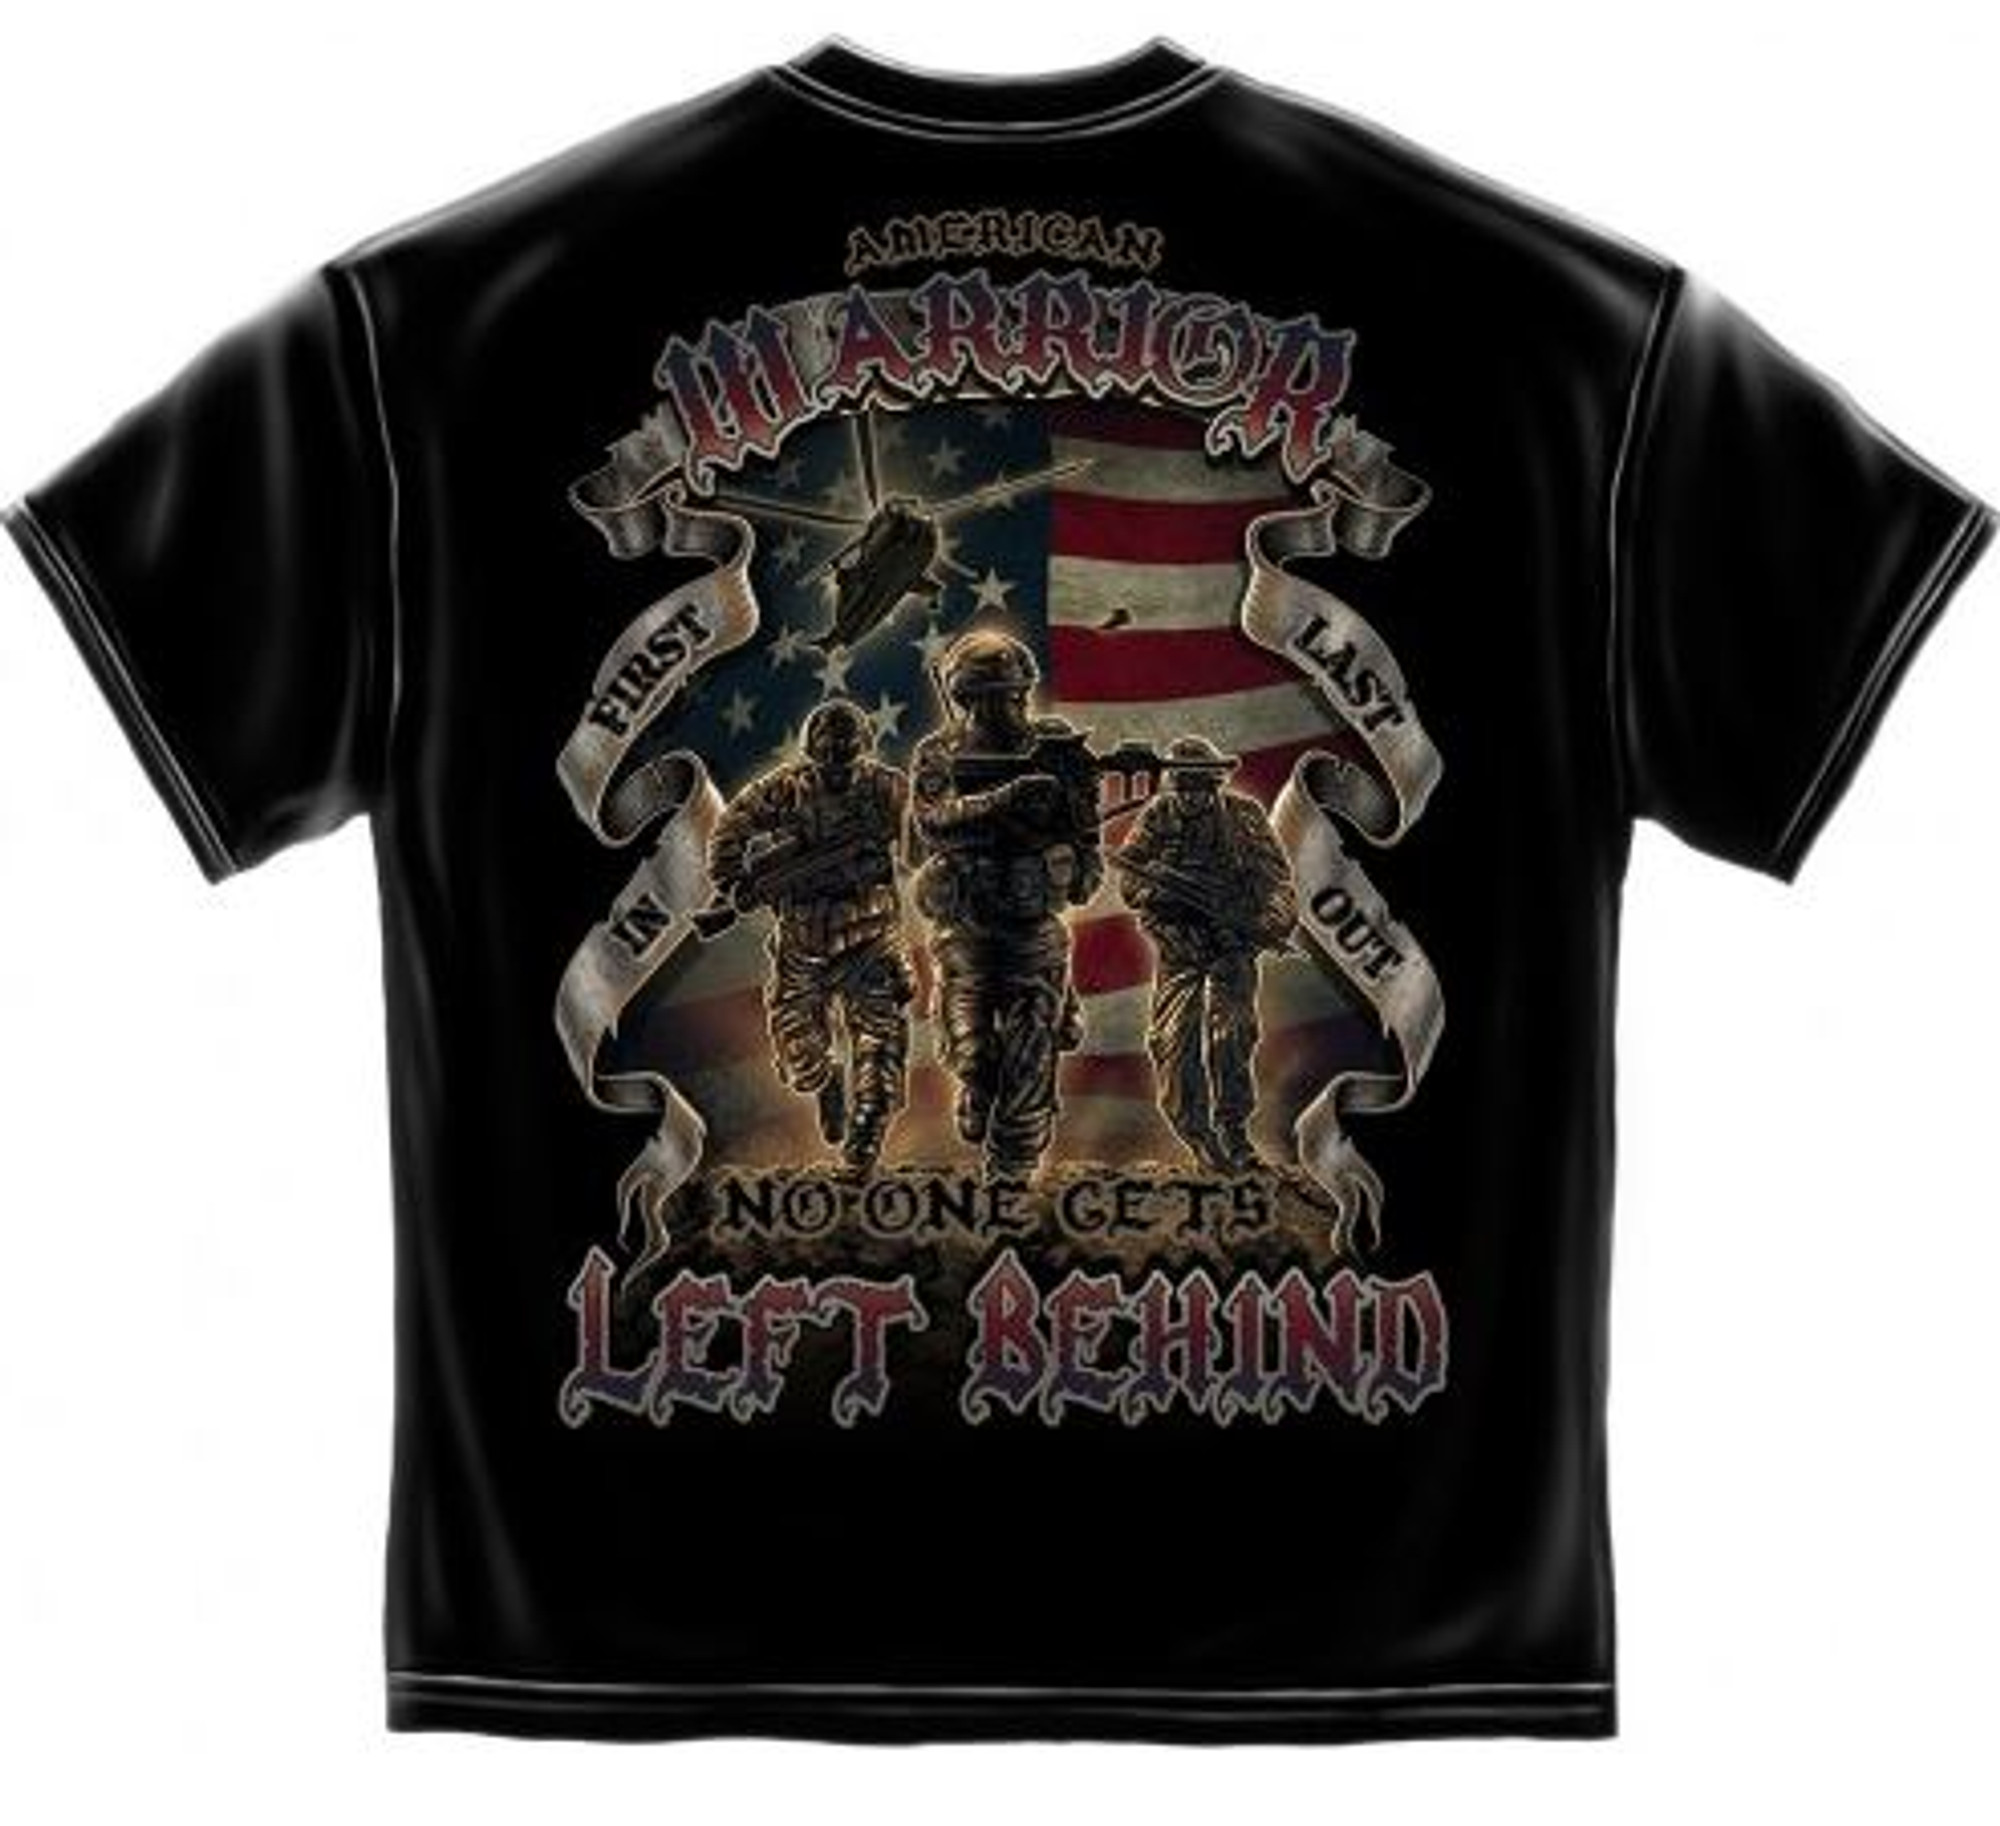 US Veteran "American Warrior" T-Shirt